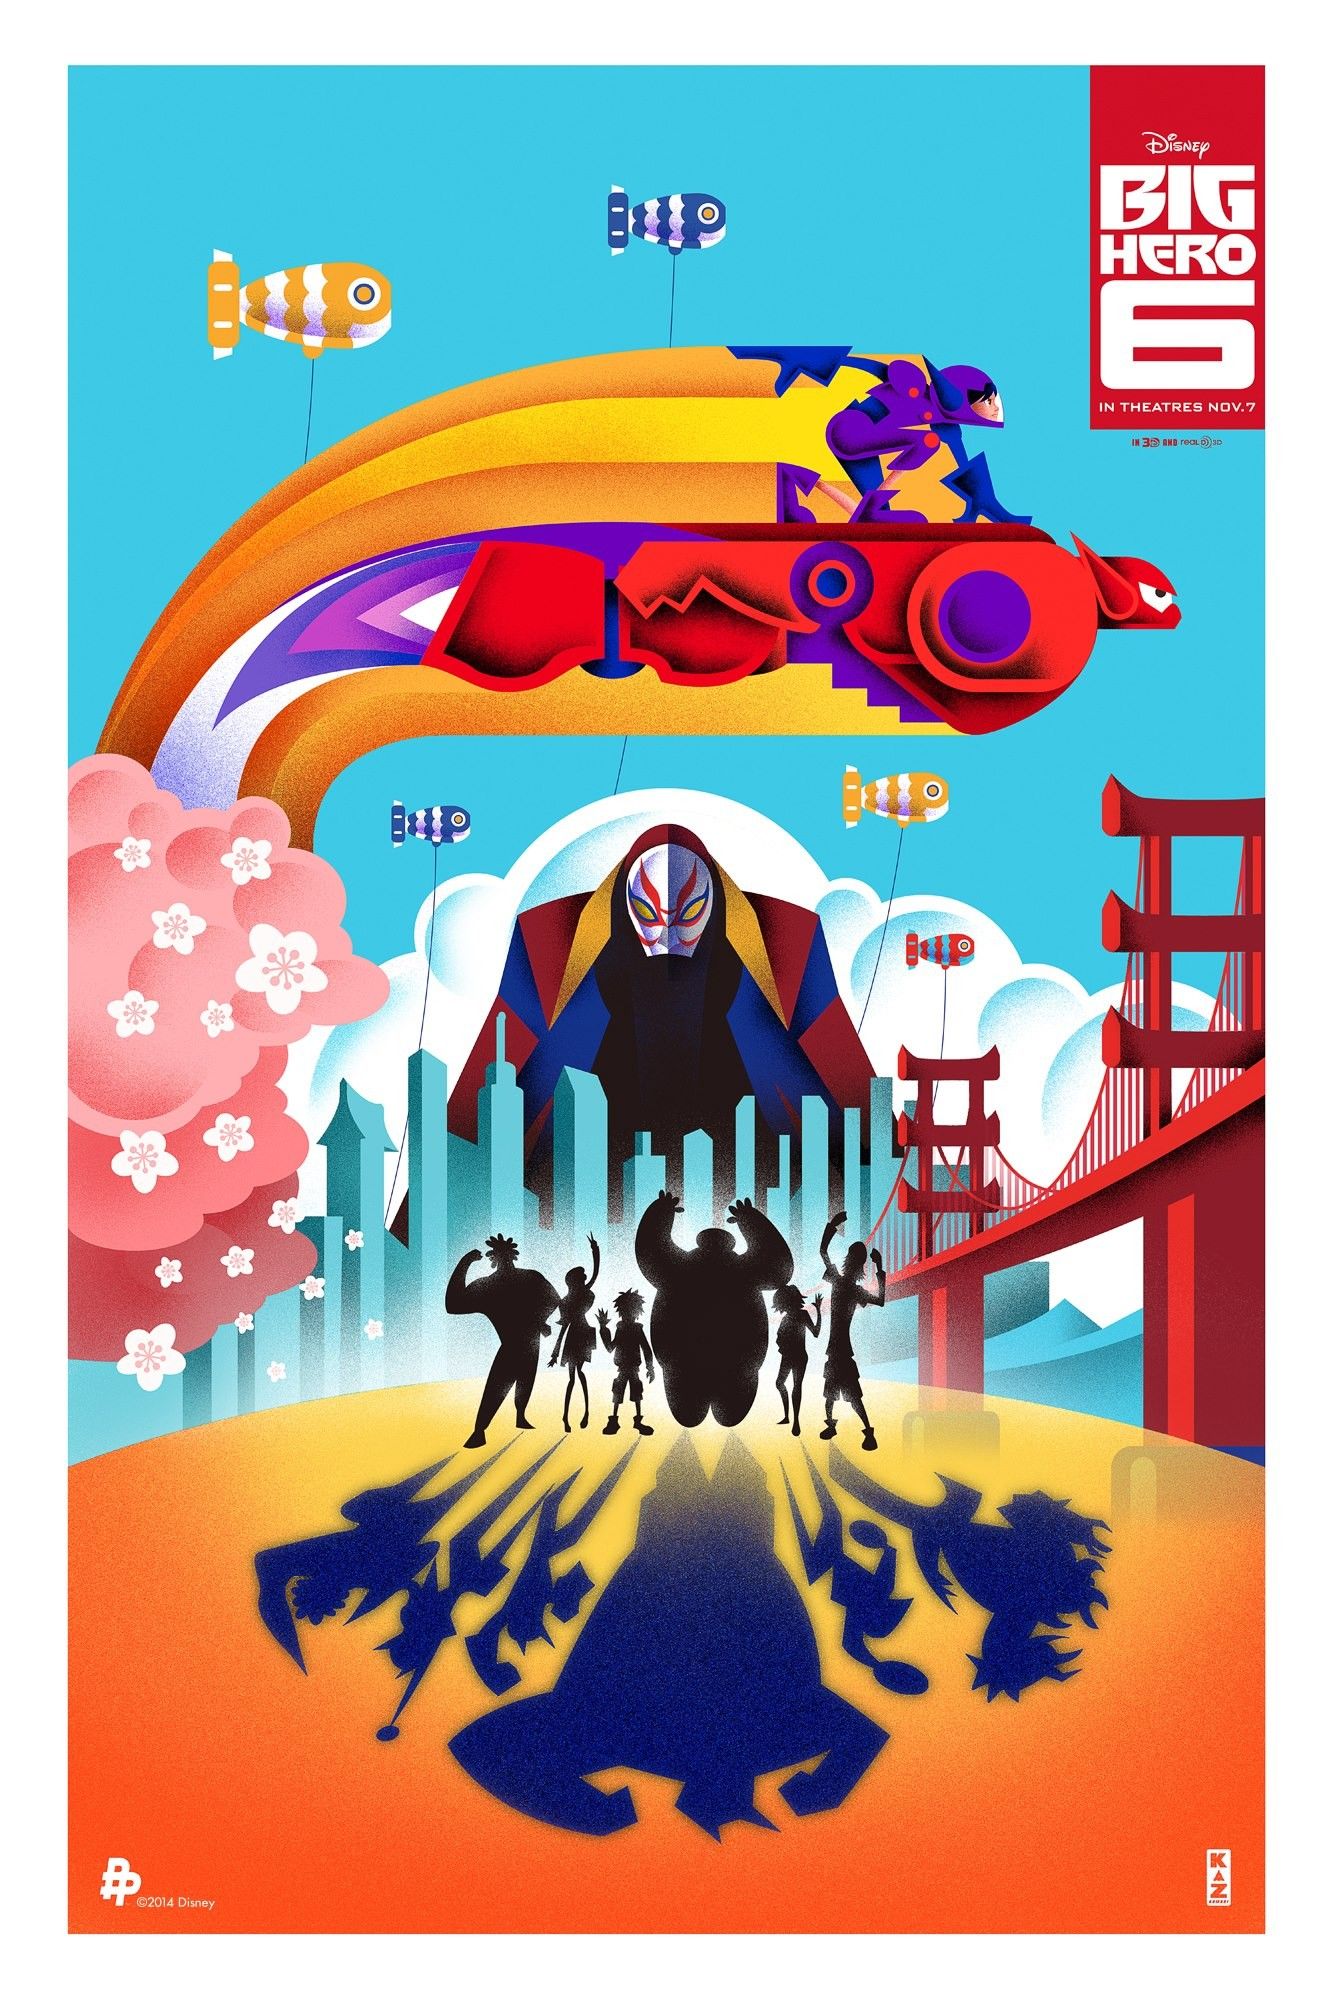 Big Hero 6 NYCC Poster